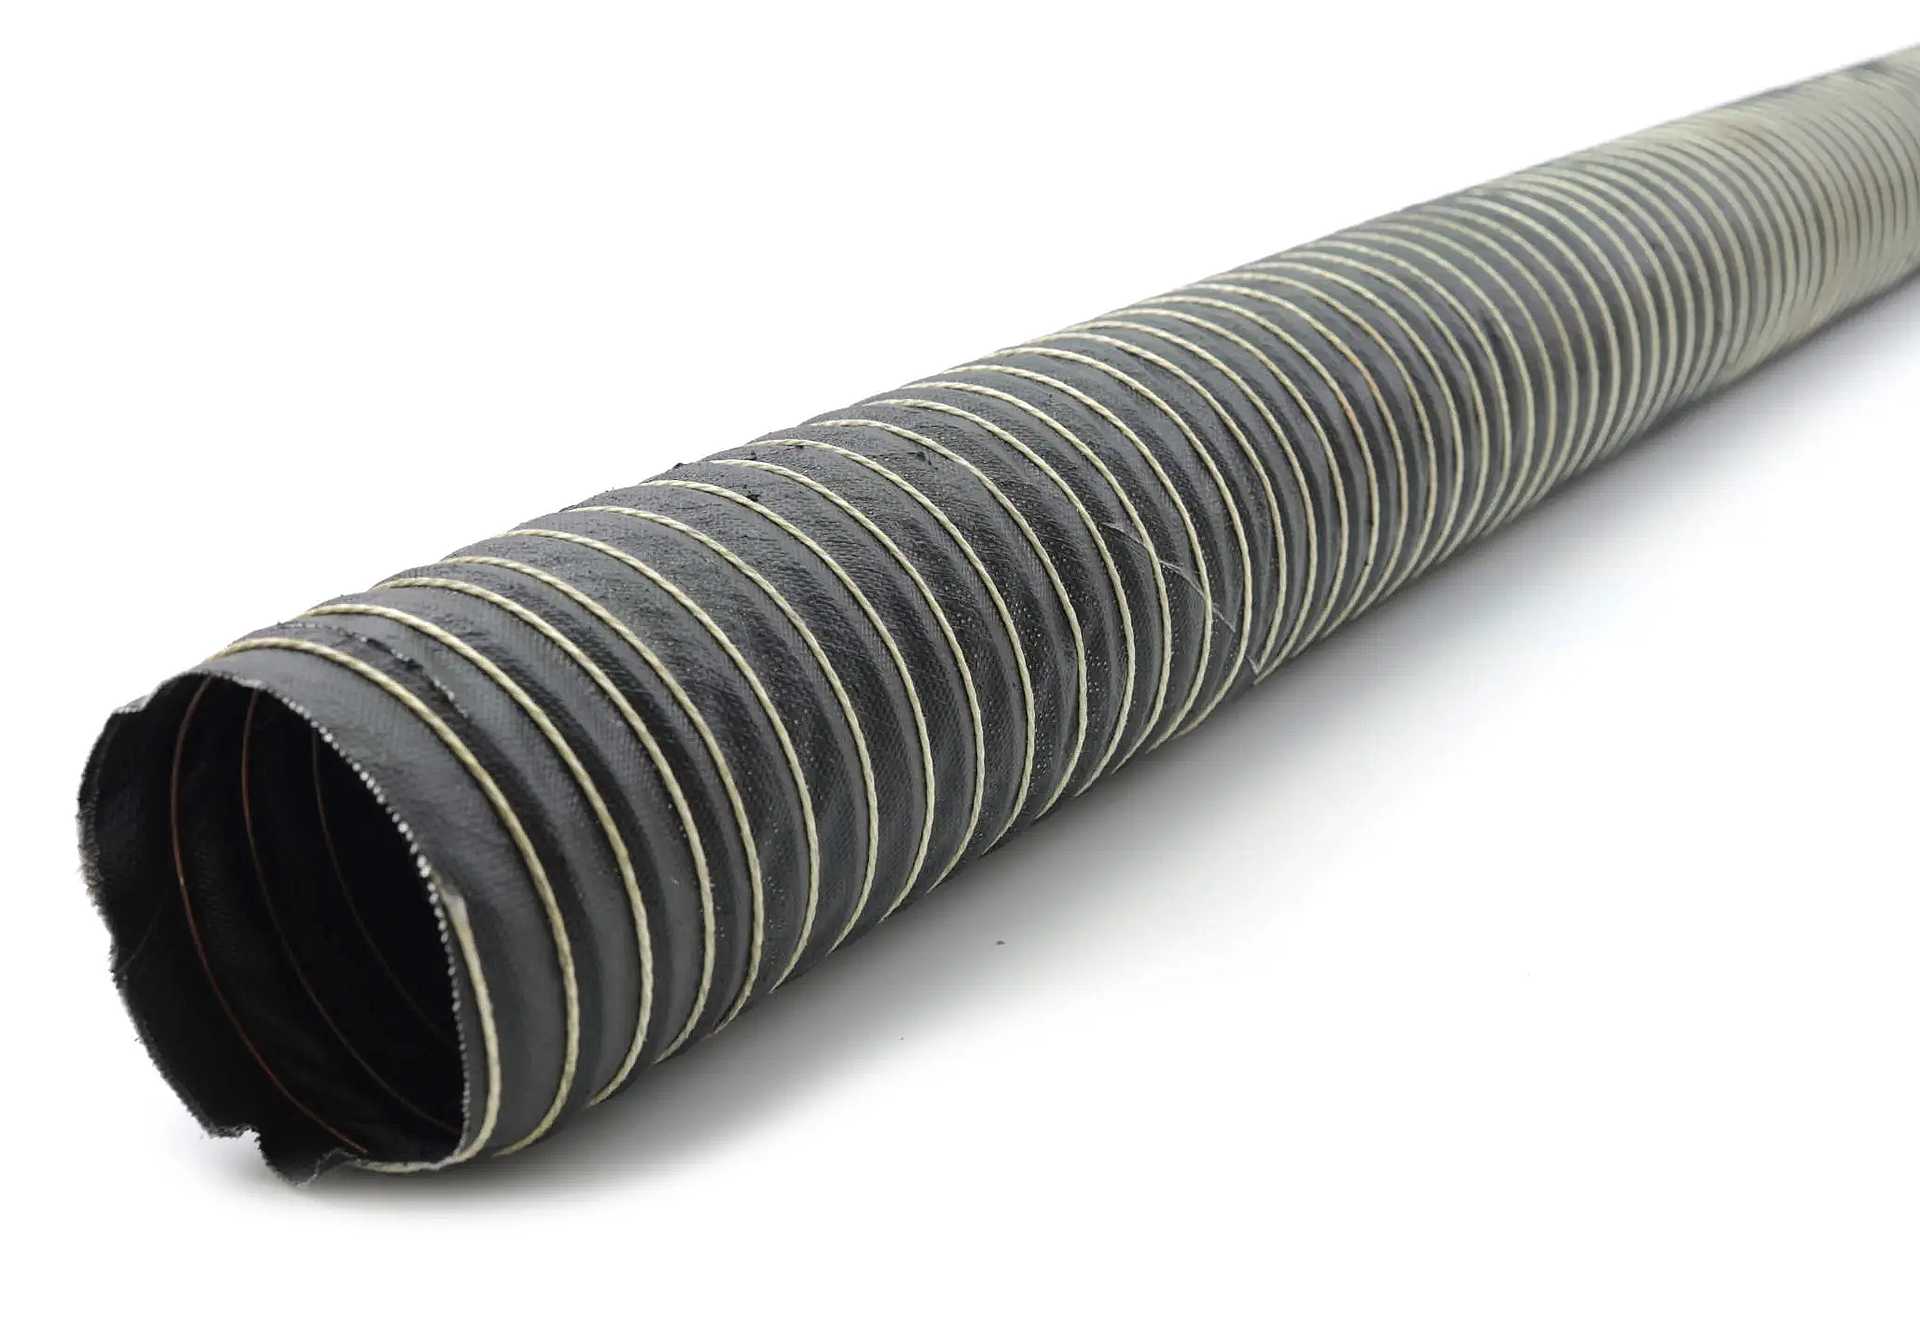 Suction hose / ventilation hose 1m BAR-TEK®